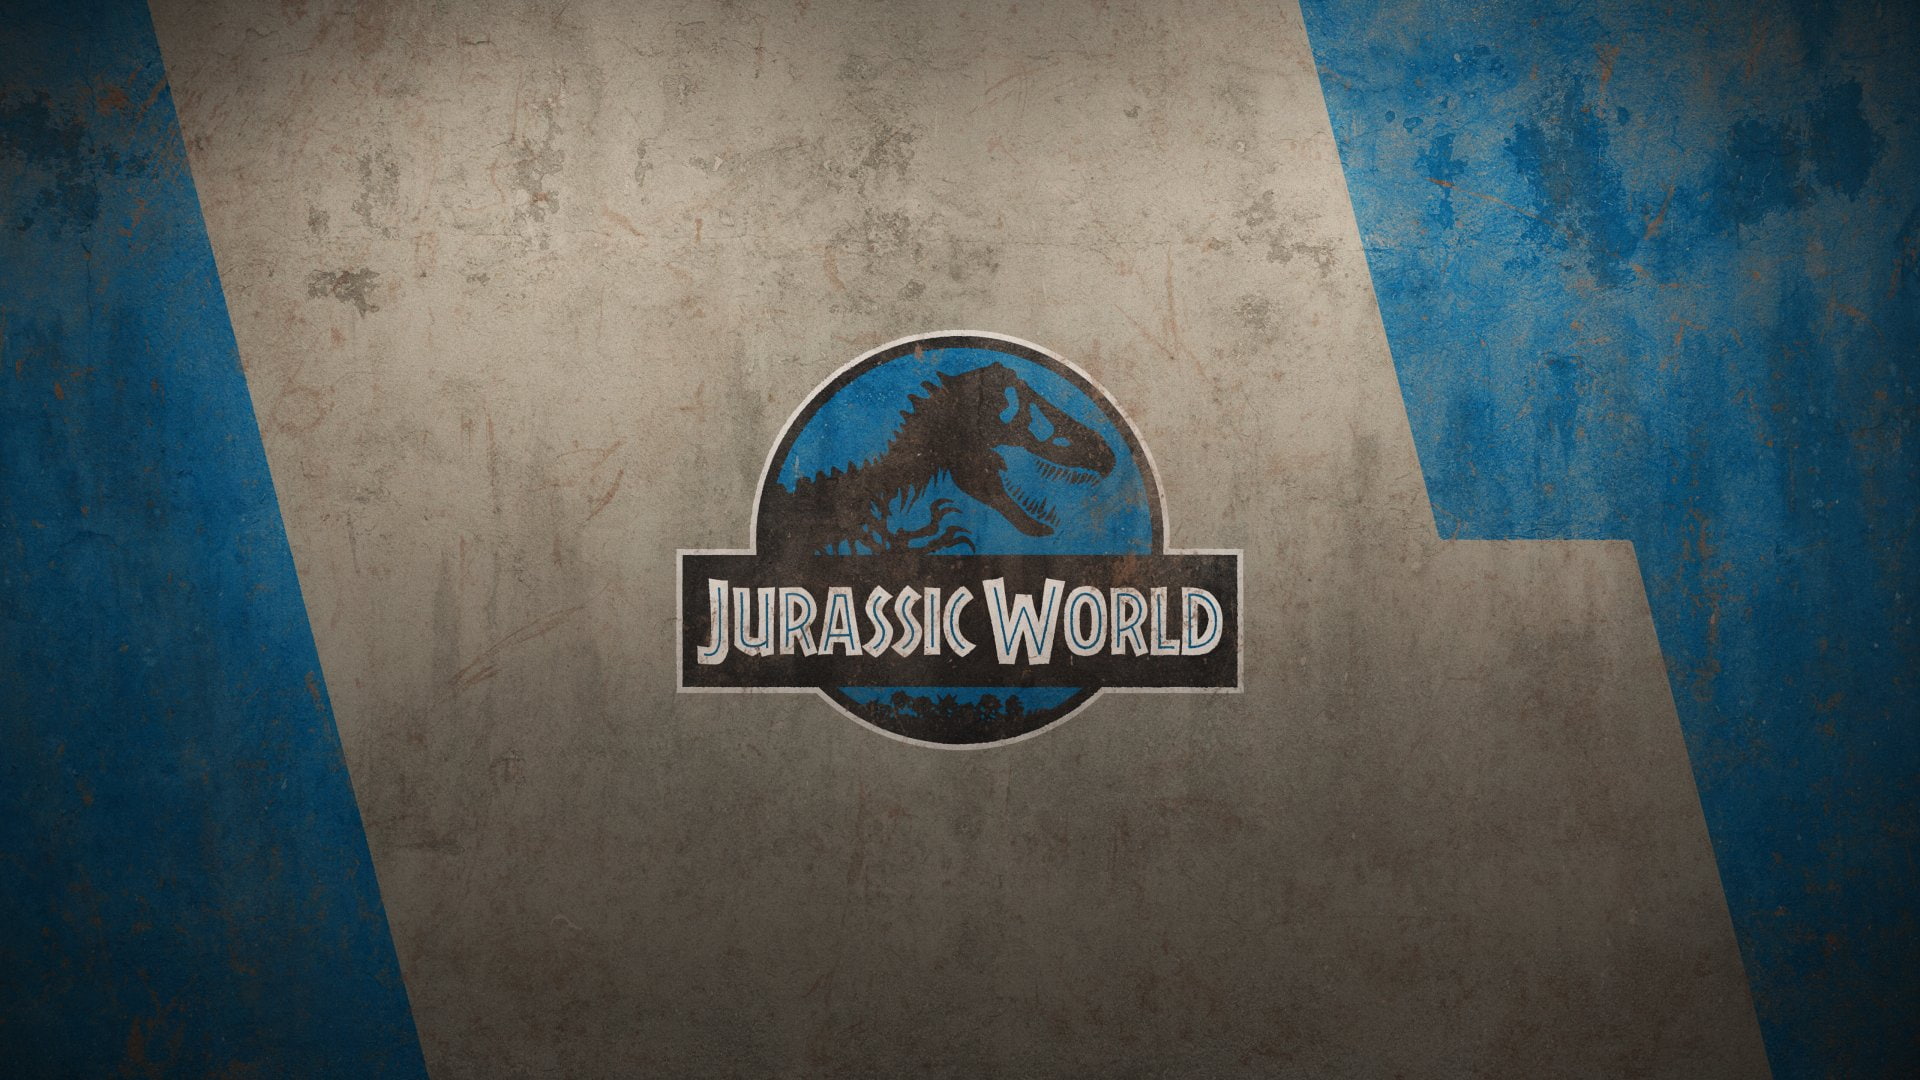 Jurassic Park, Jurassic World